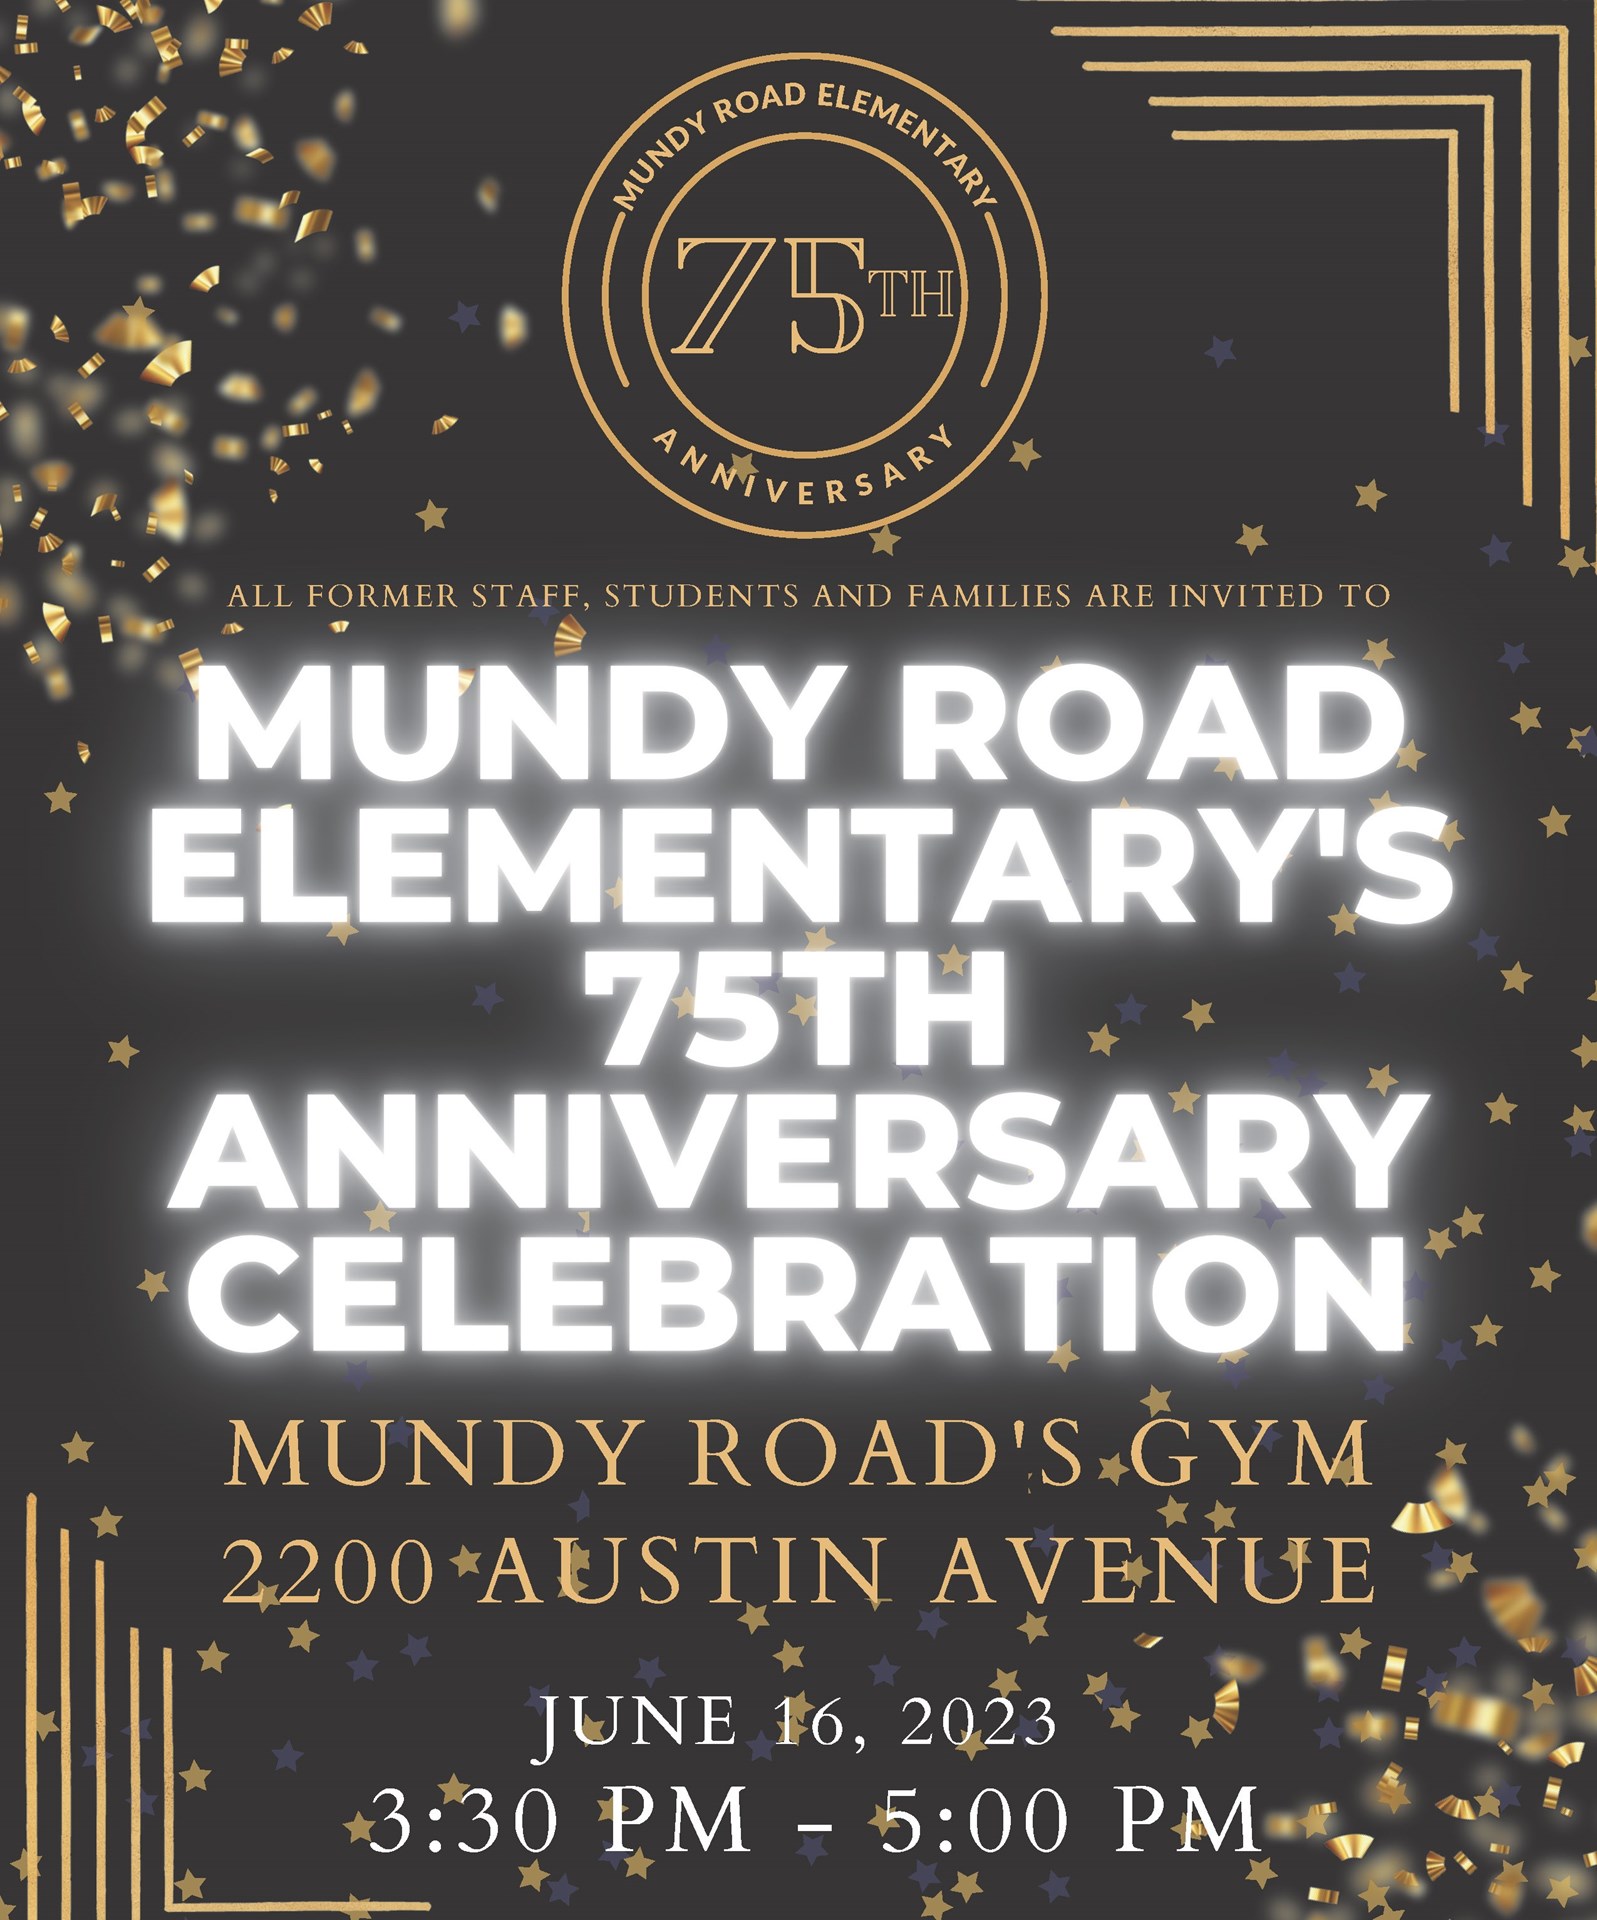 Celebrate Mundy Road Elementary's 75th Anniversary Celebration!